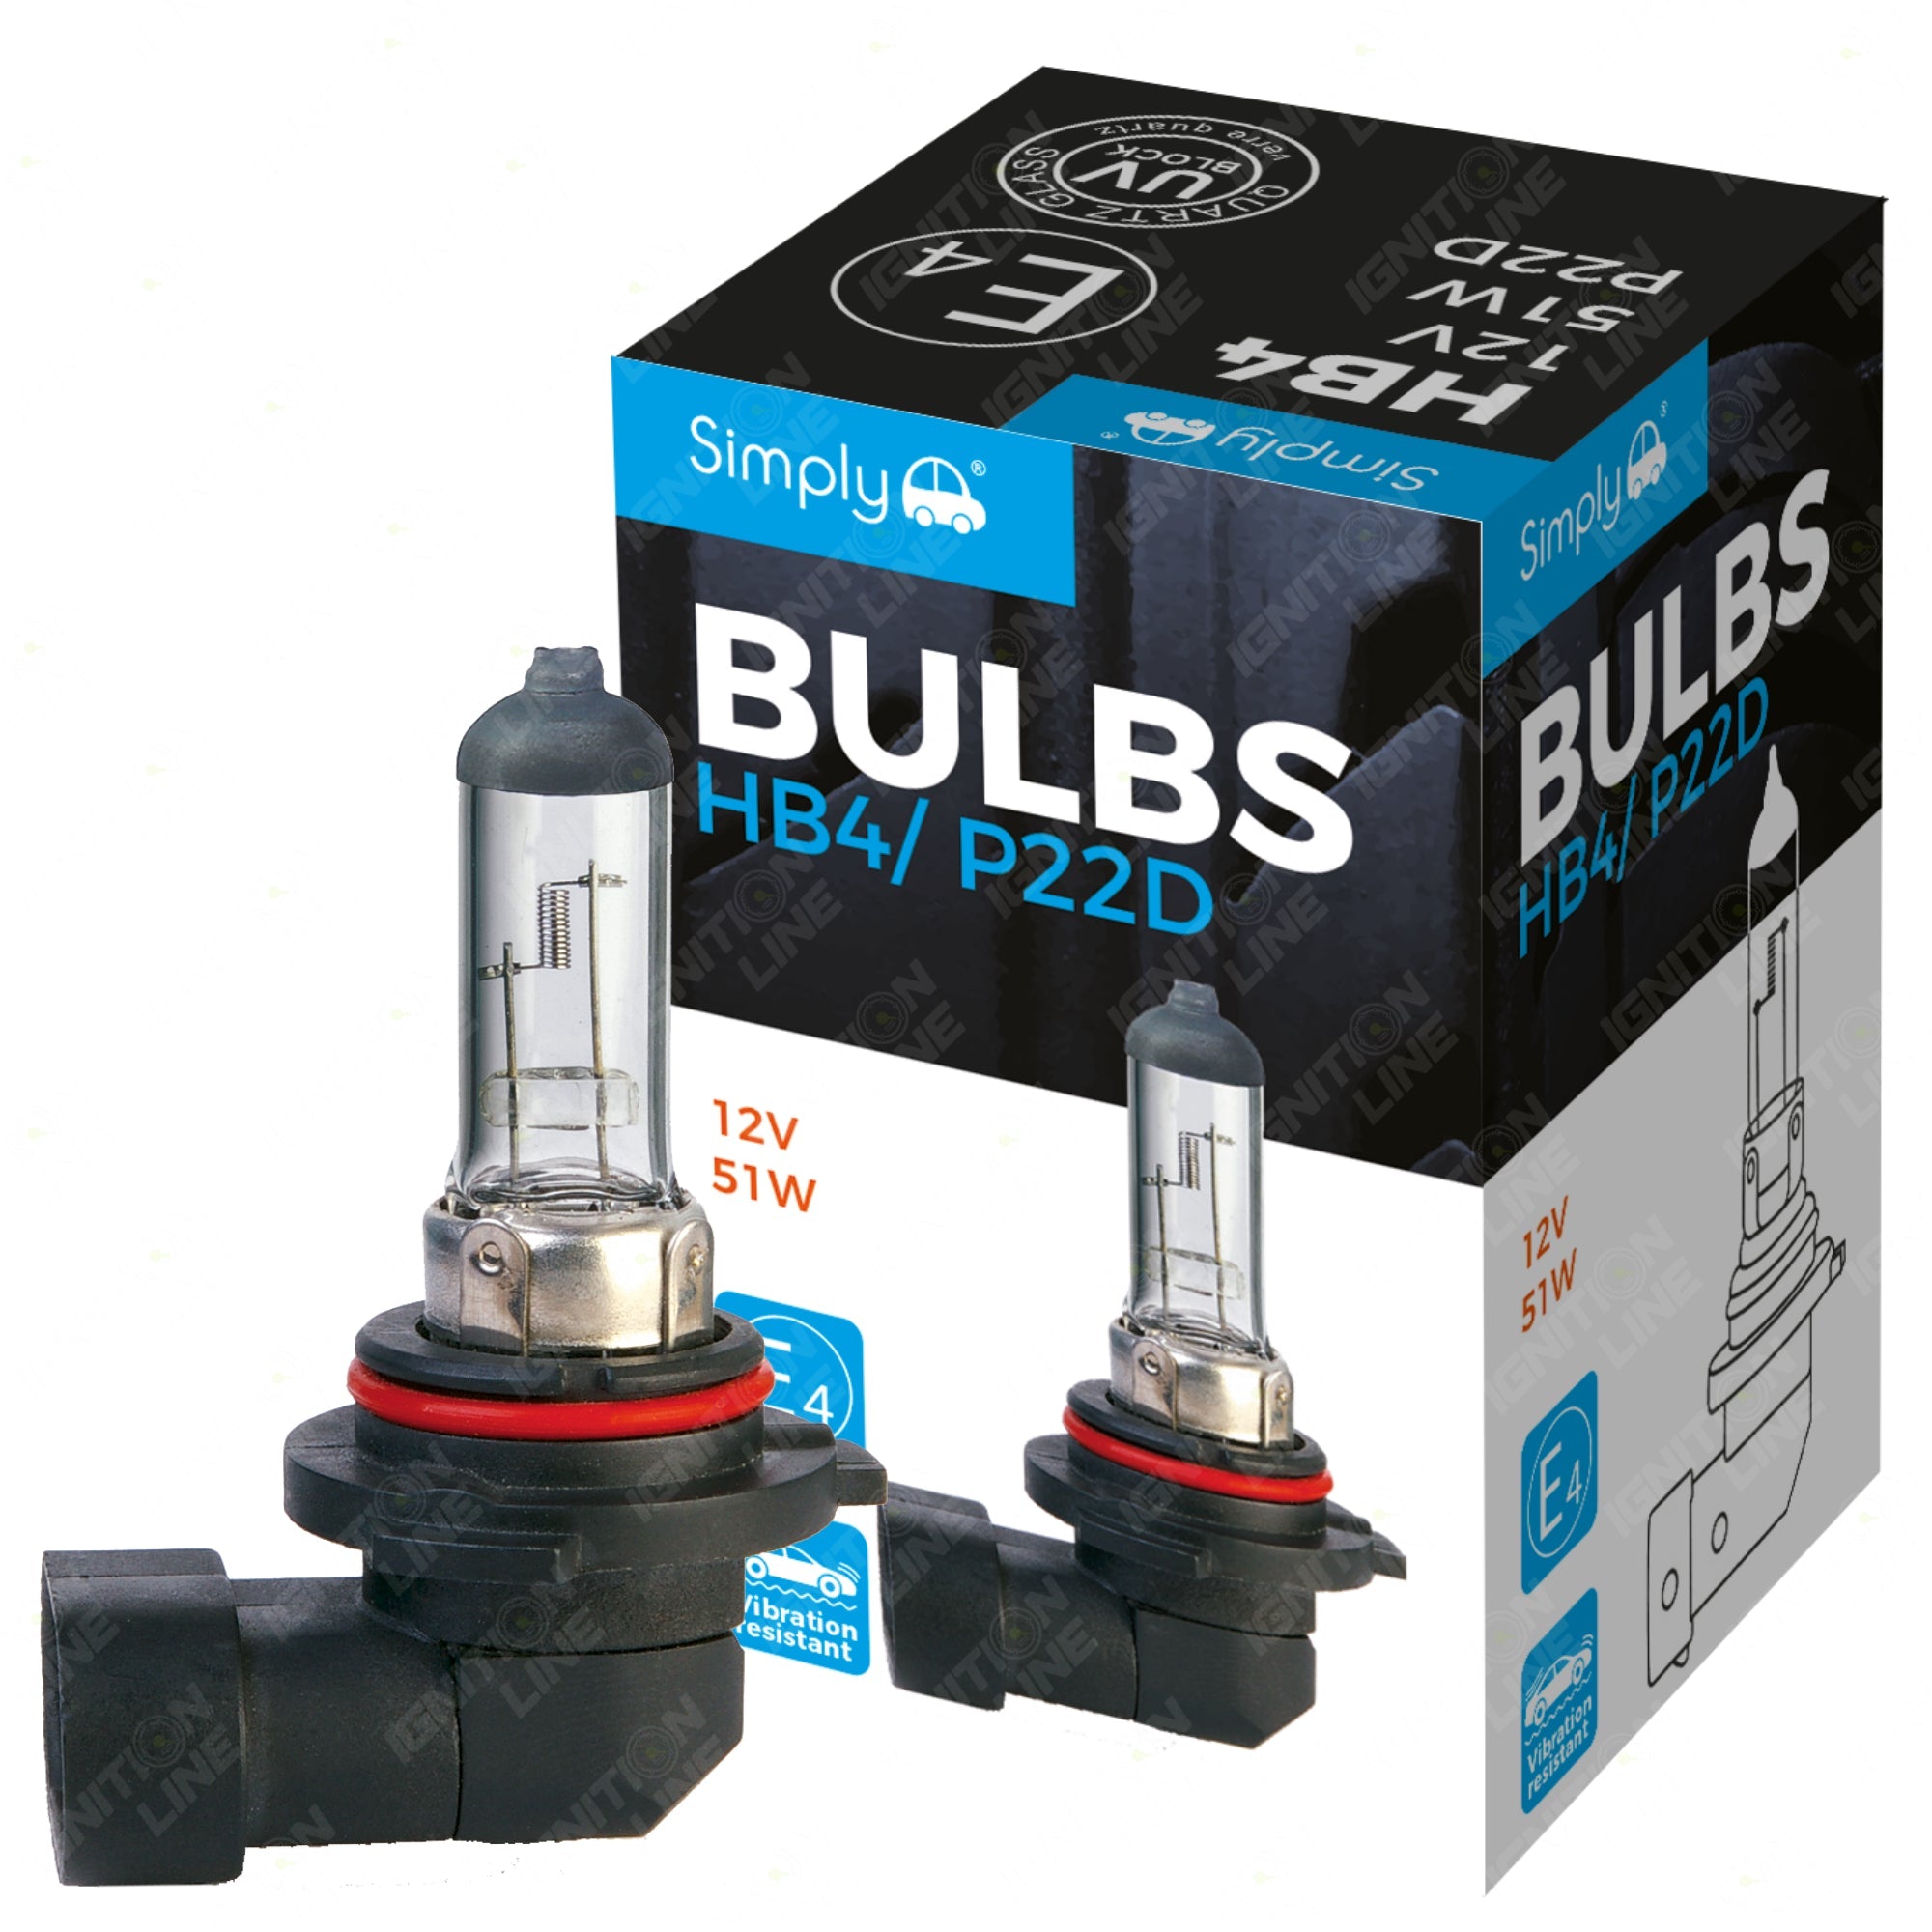 HB4 9006 12V 51W Halogen Headlight Bulb